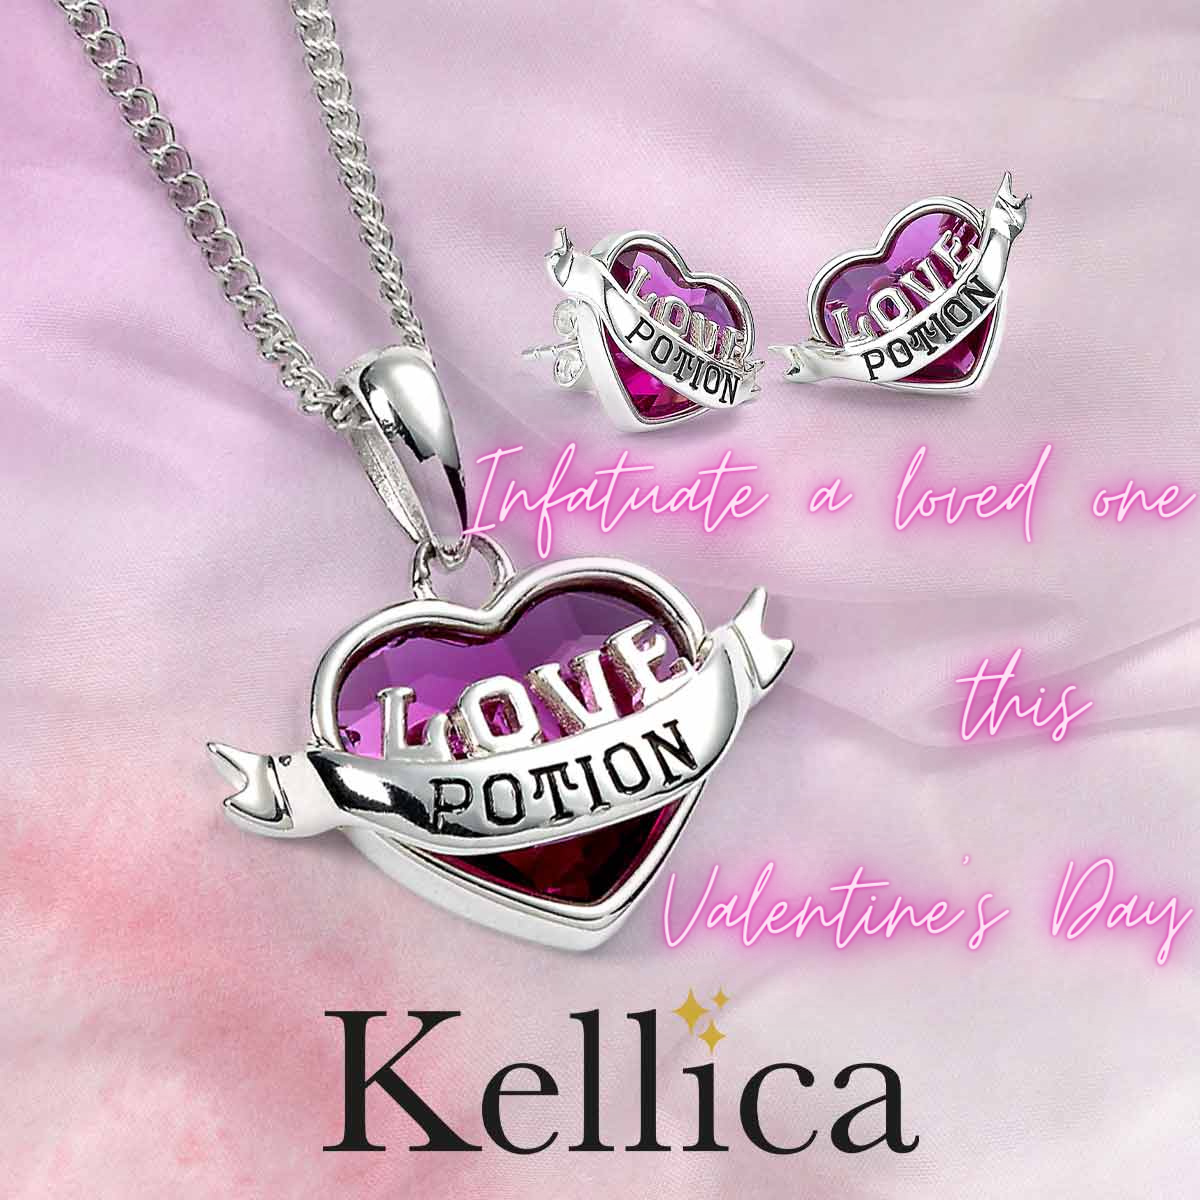 Kellica Valentine's Day